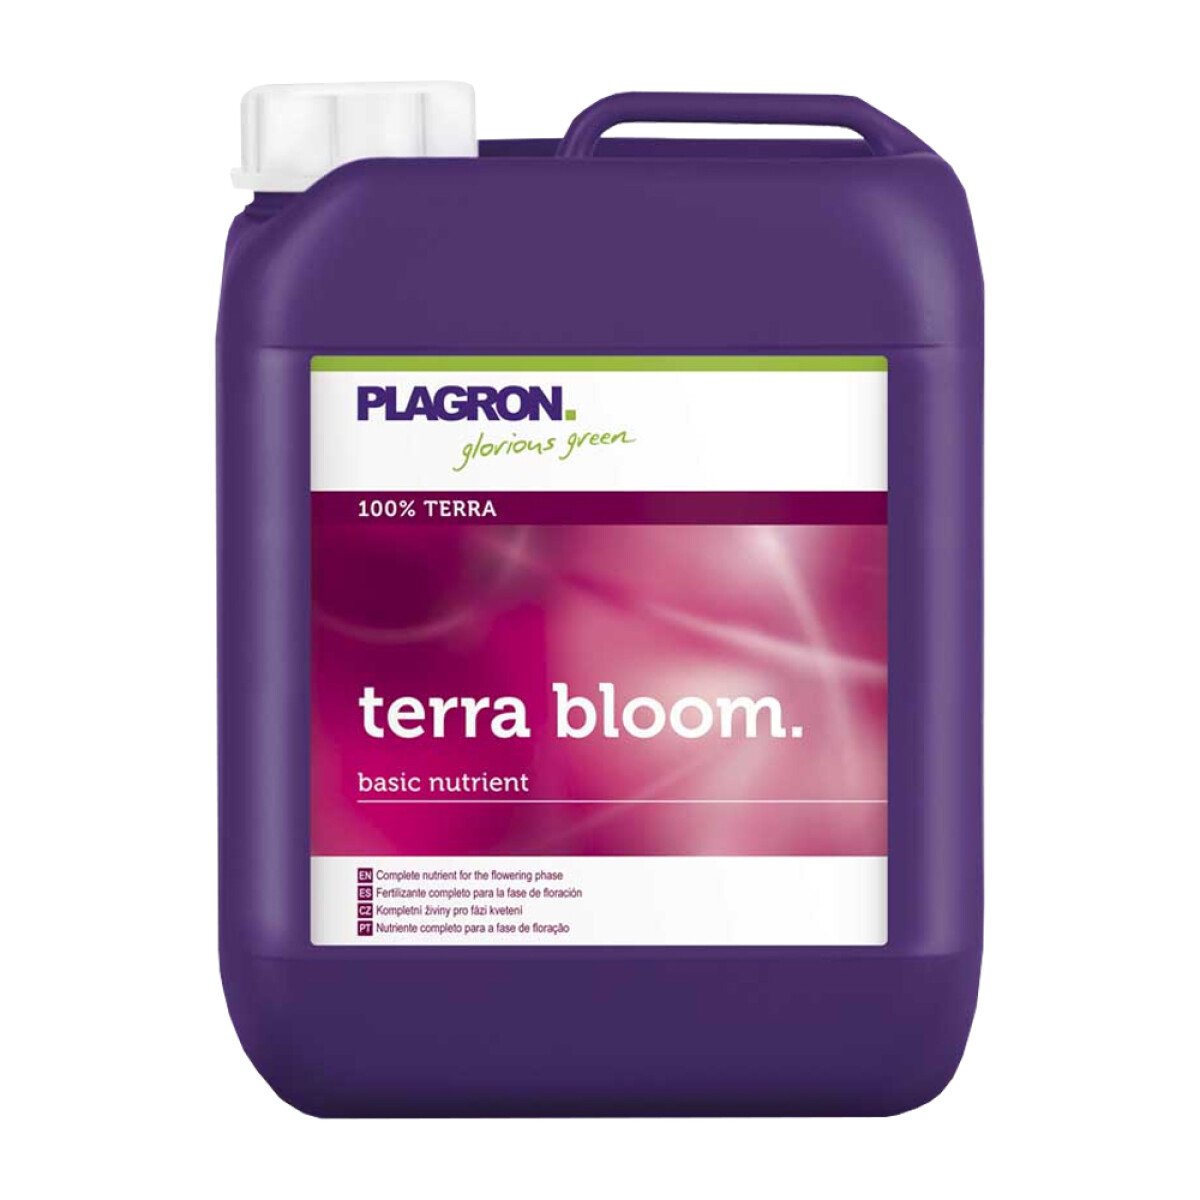 TERRA BLOOM PLAGRON - 10L 